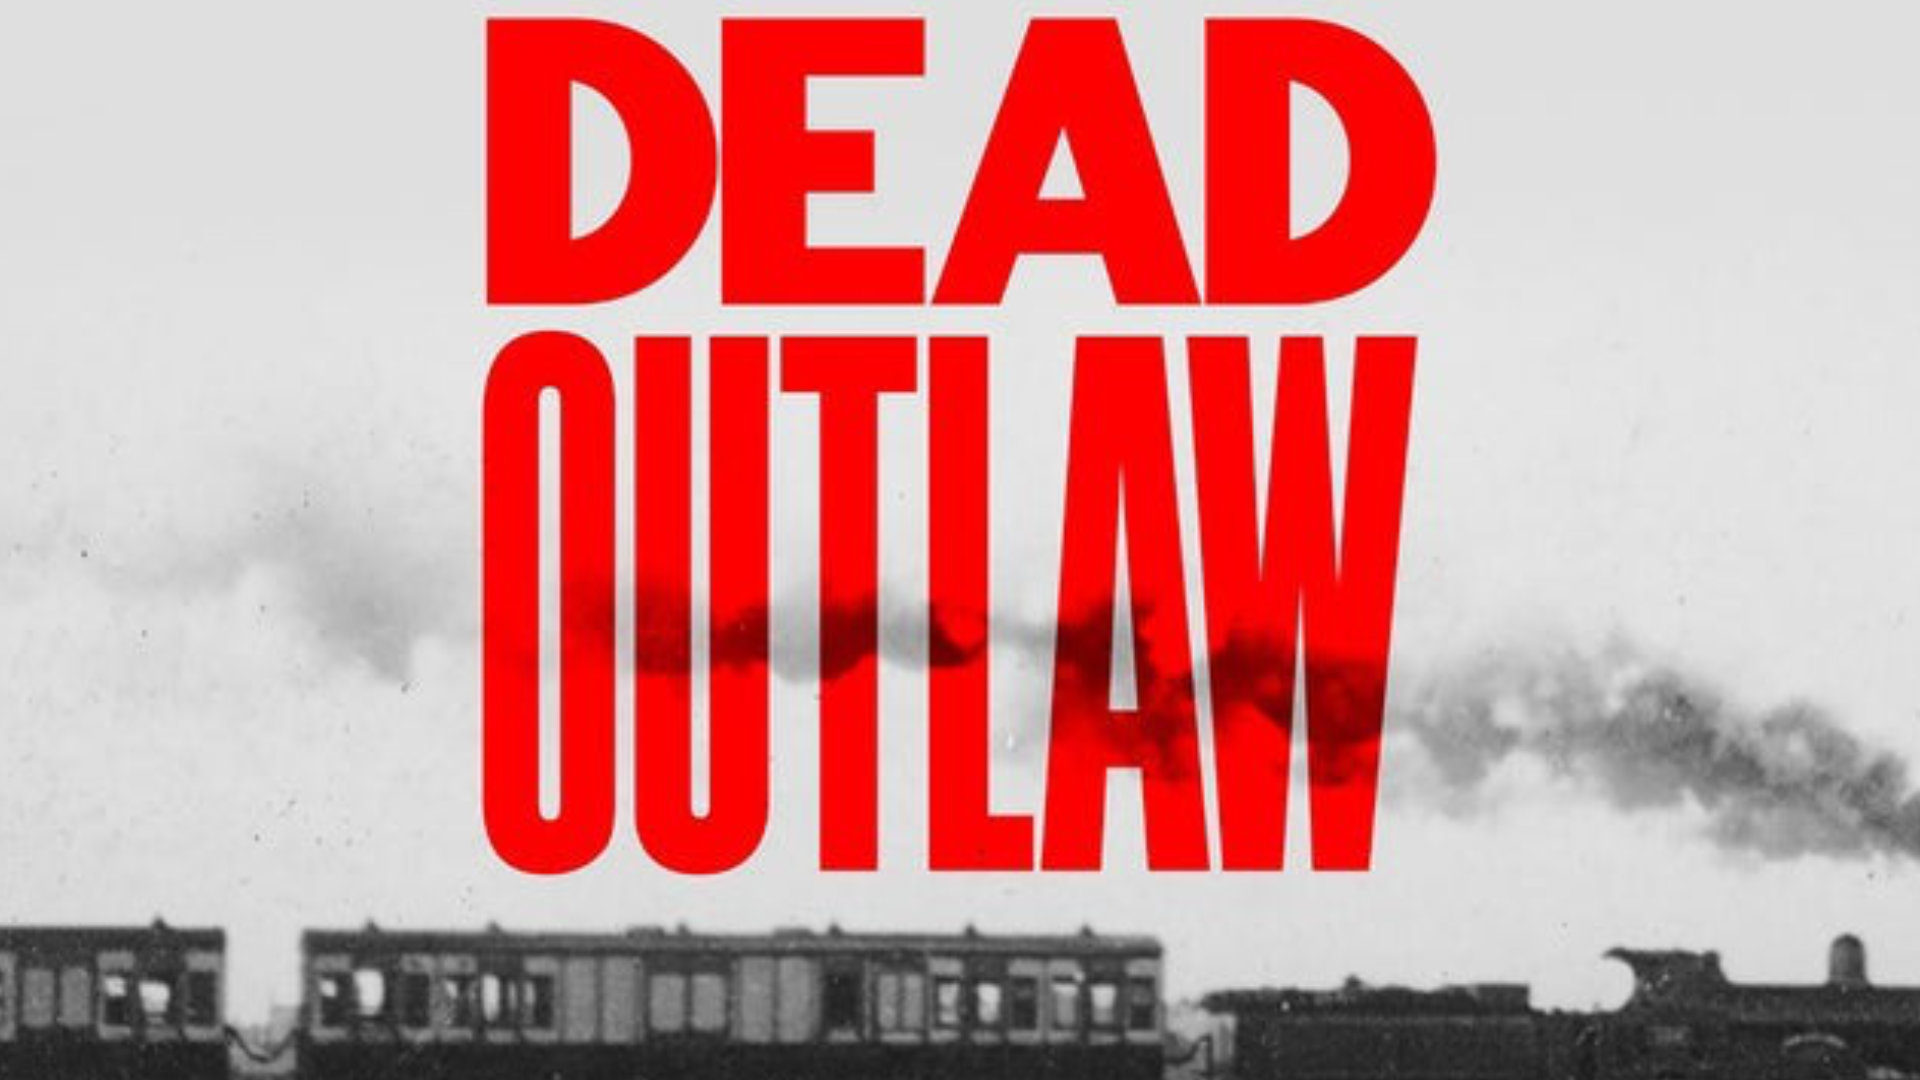 Dead Outlaw logo